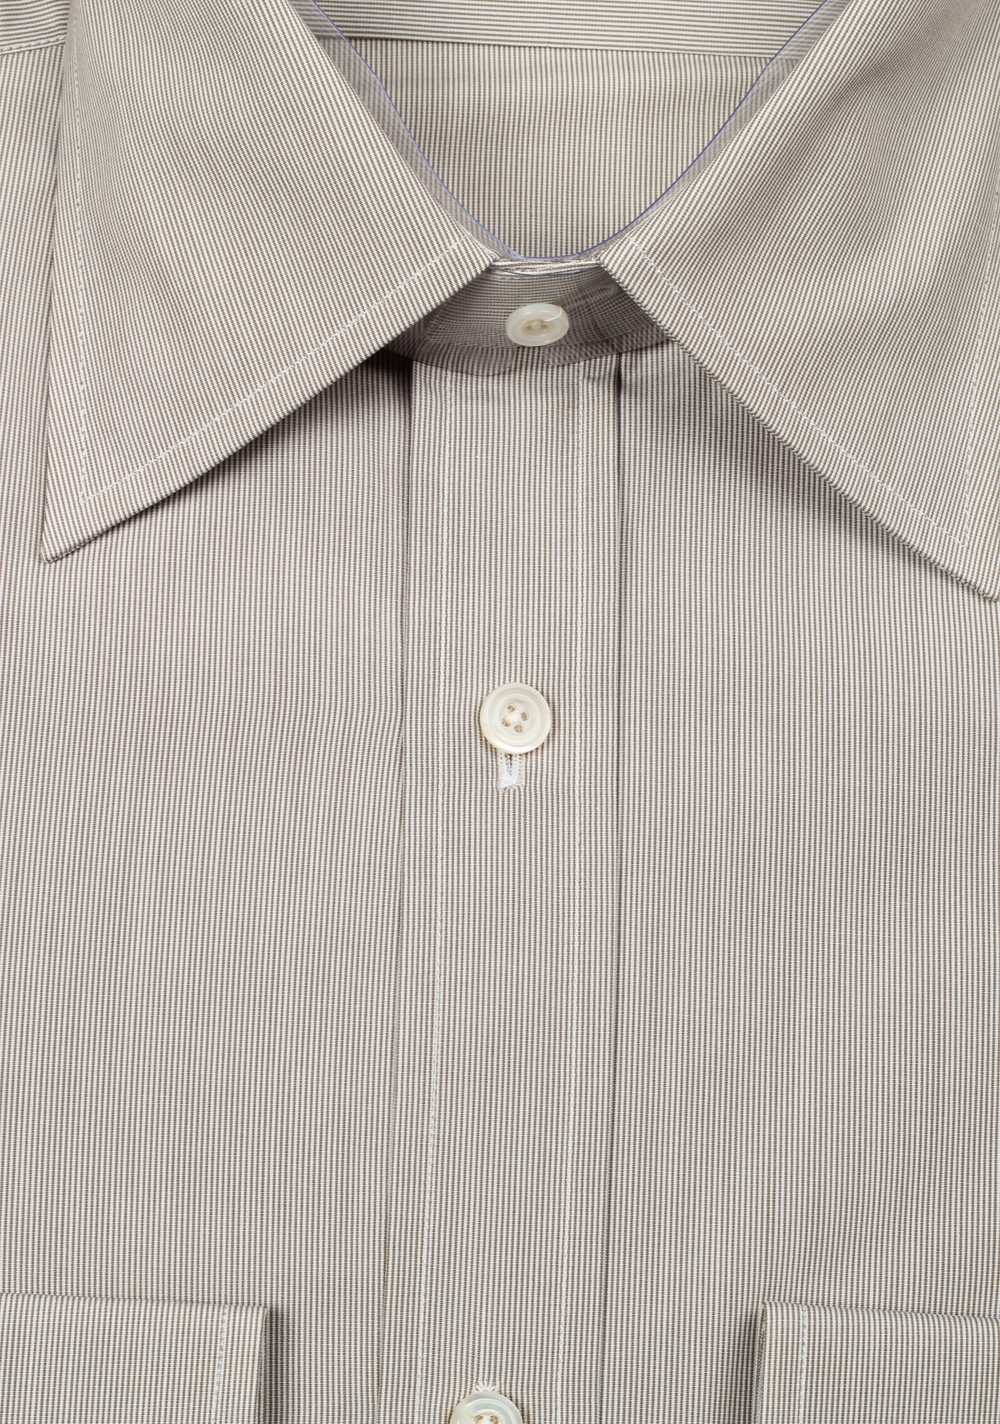 TOM FORD Striped White Gray Dress Shirt Size 40 / 15,75 U.S. | Costume Limité